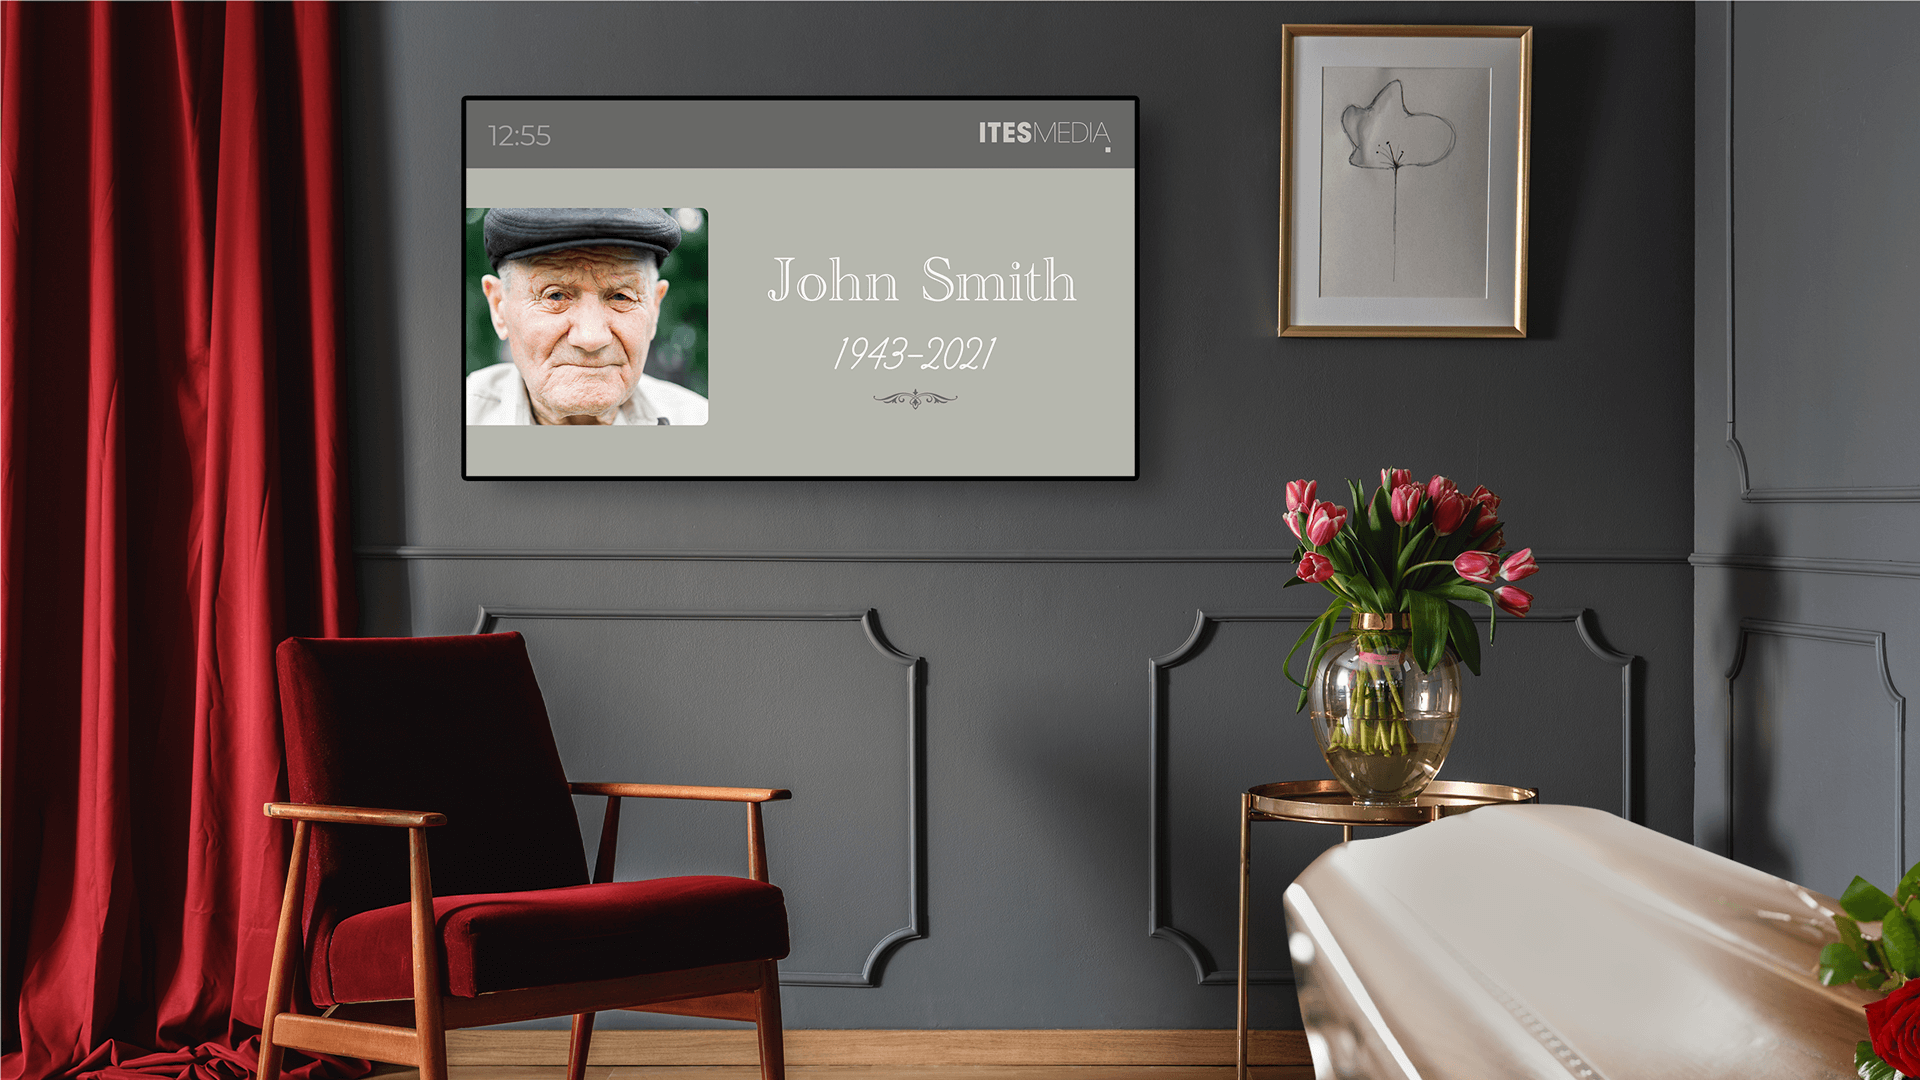 Digital signage for funeral homes